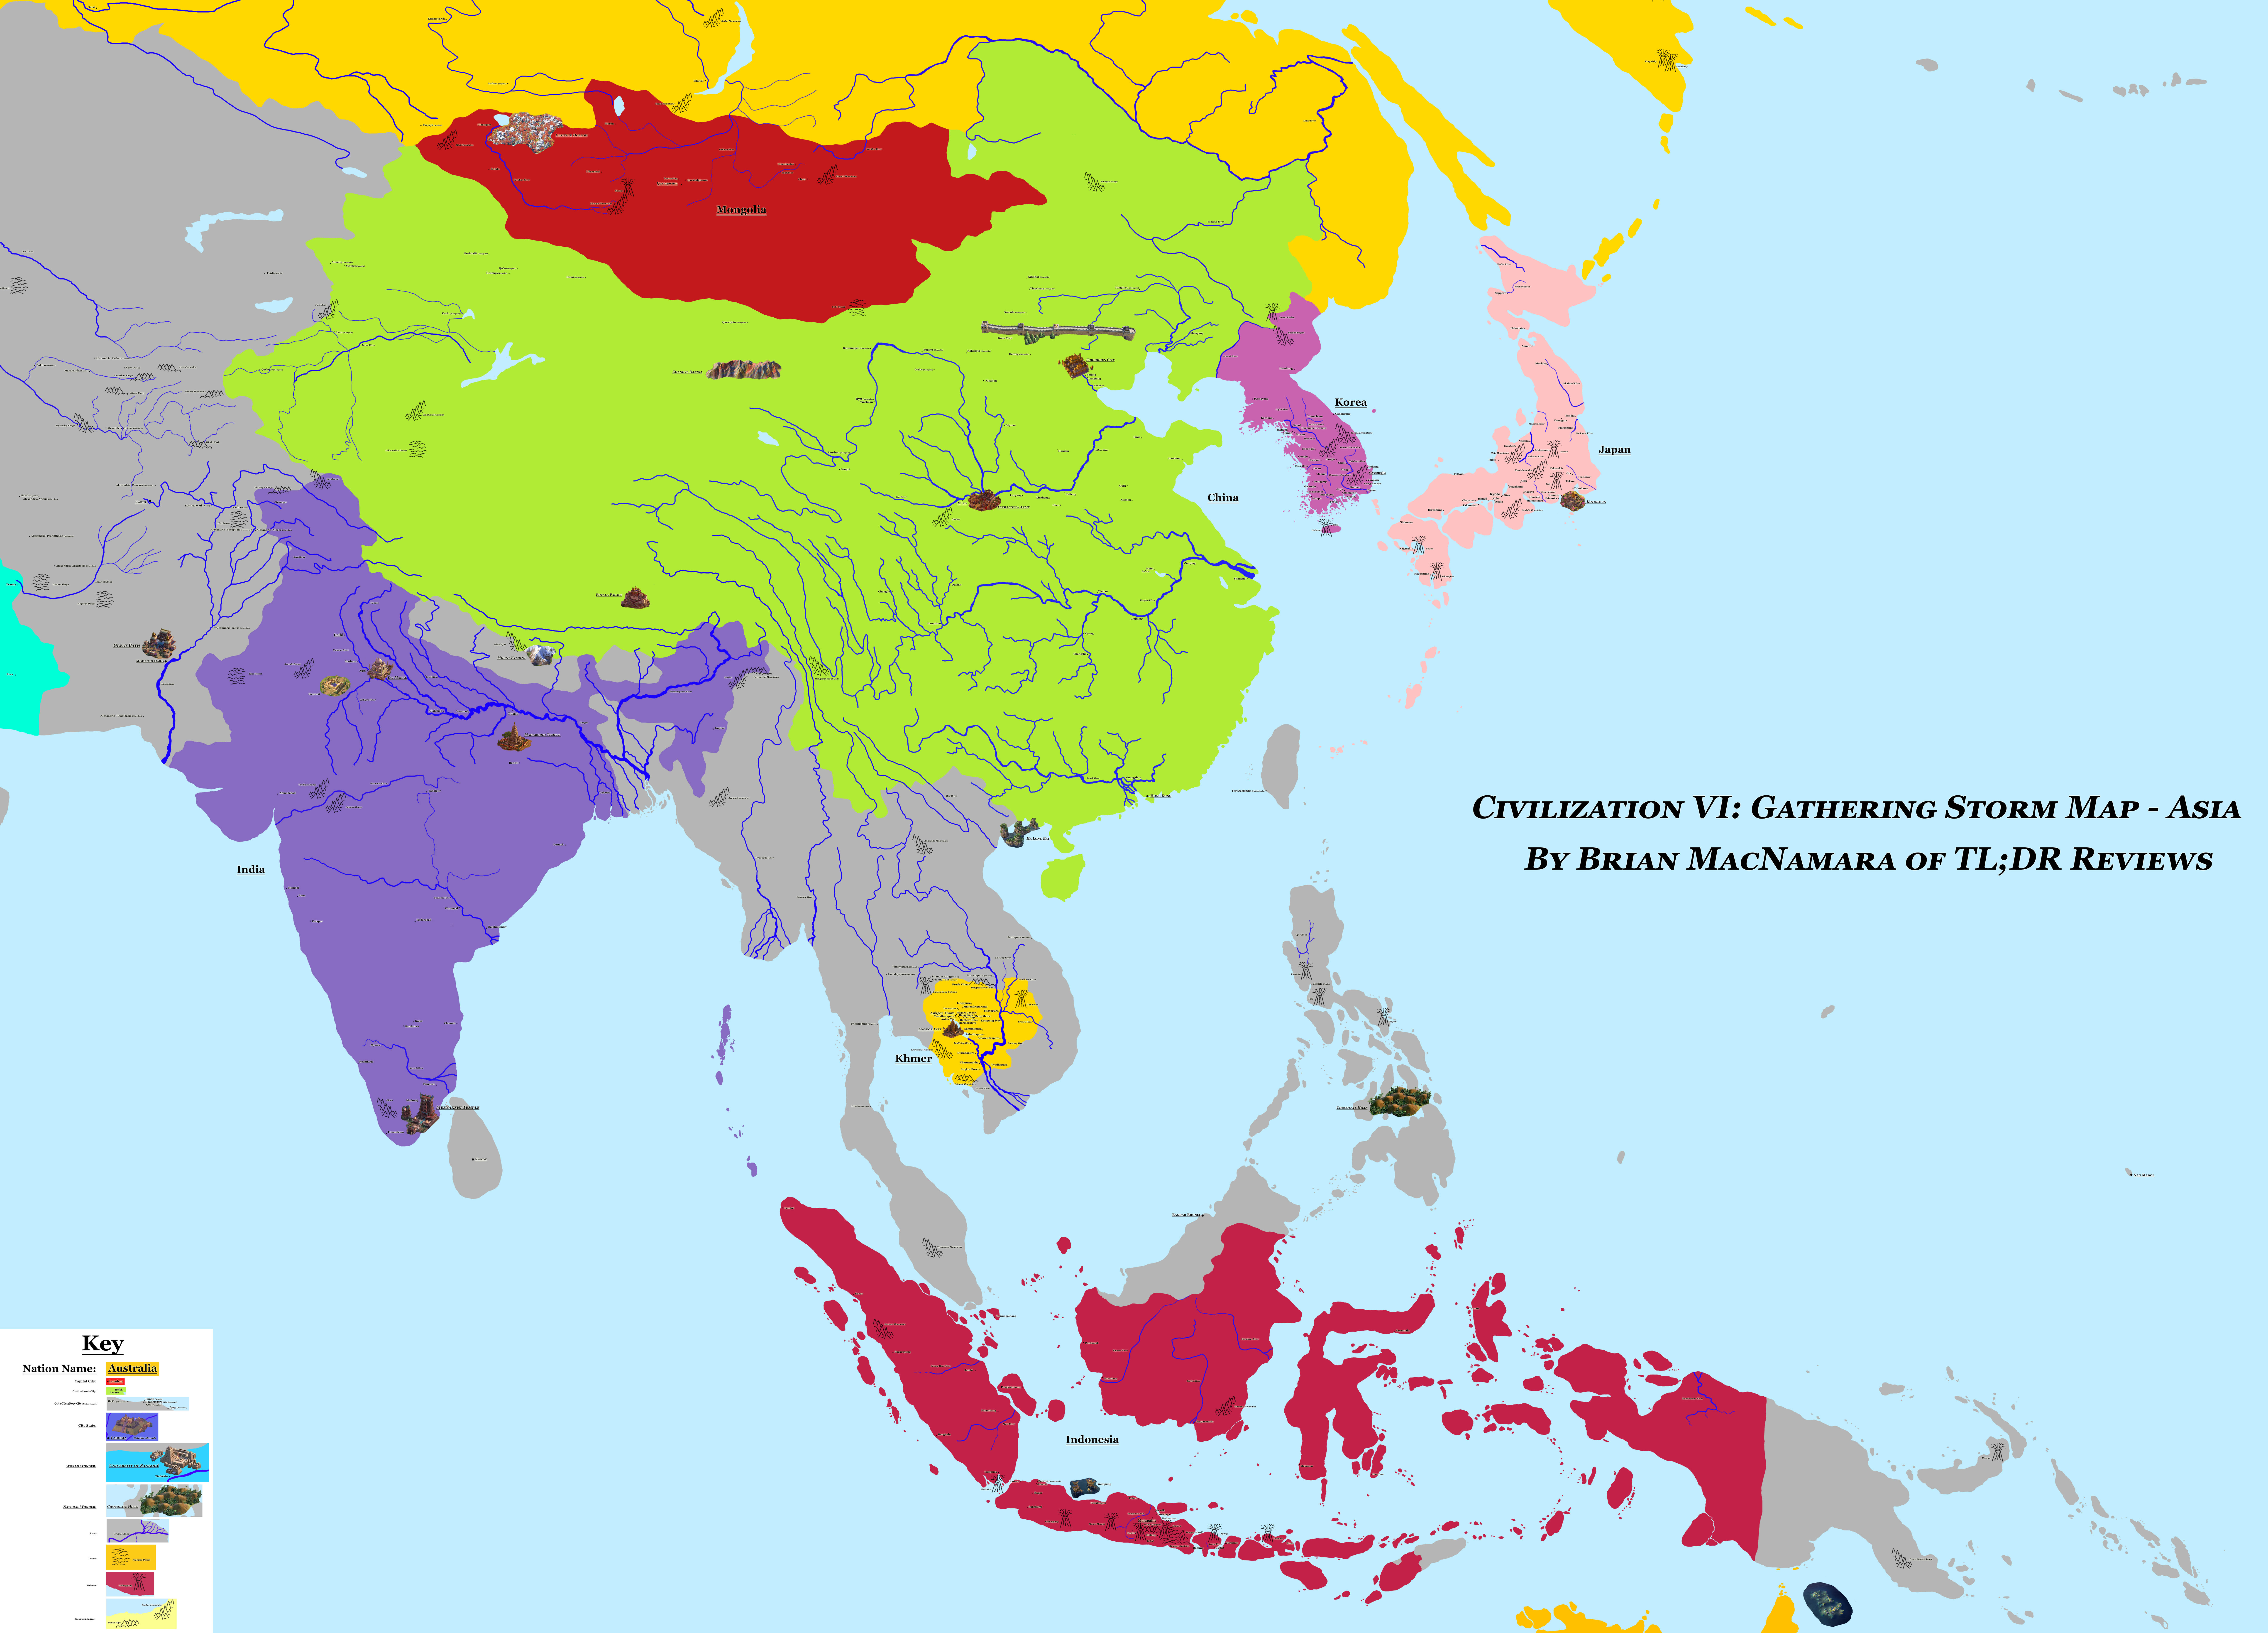 Asia in Civilization VI: Gathering Storm